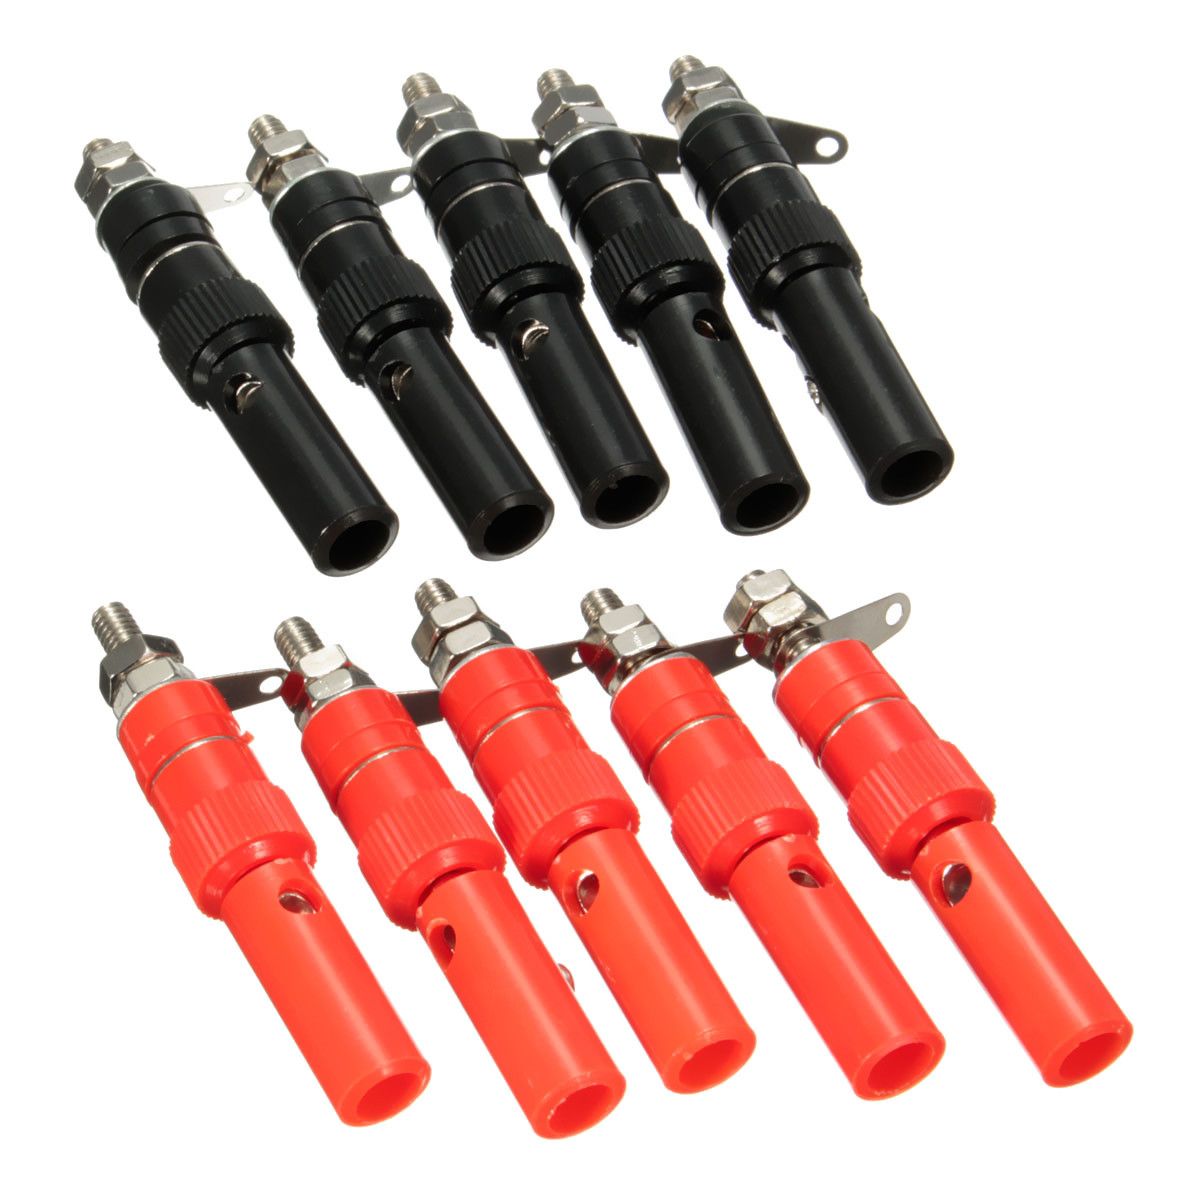 DANIU-30-Pairs-4mm-Terminal-Banana-Plug-Socket-Jack-Connectors-Instrument-Light-Tools-Black-and-Red-1358117